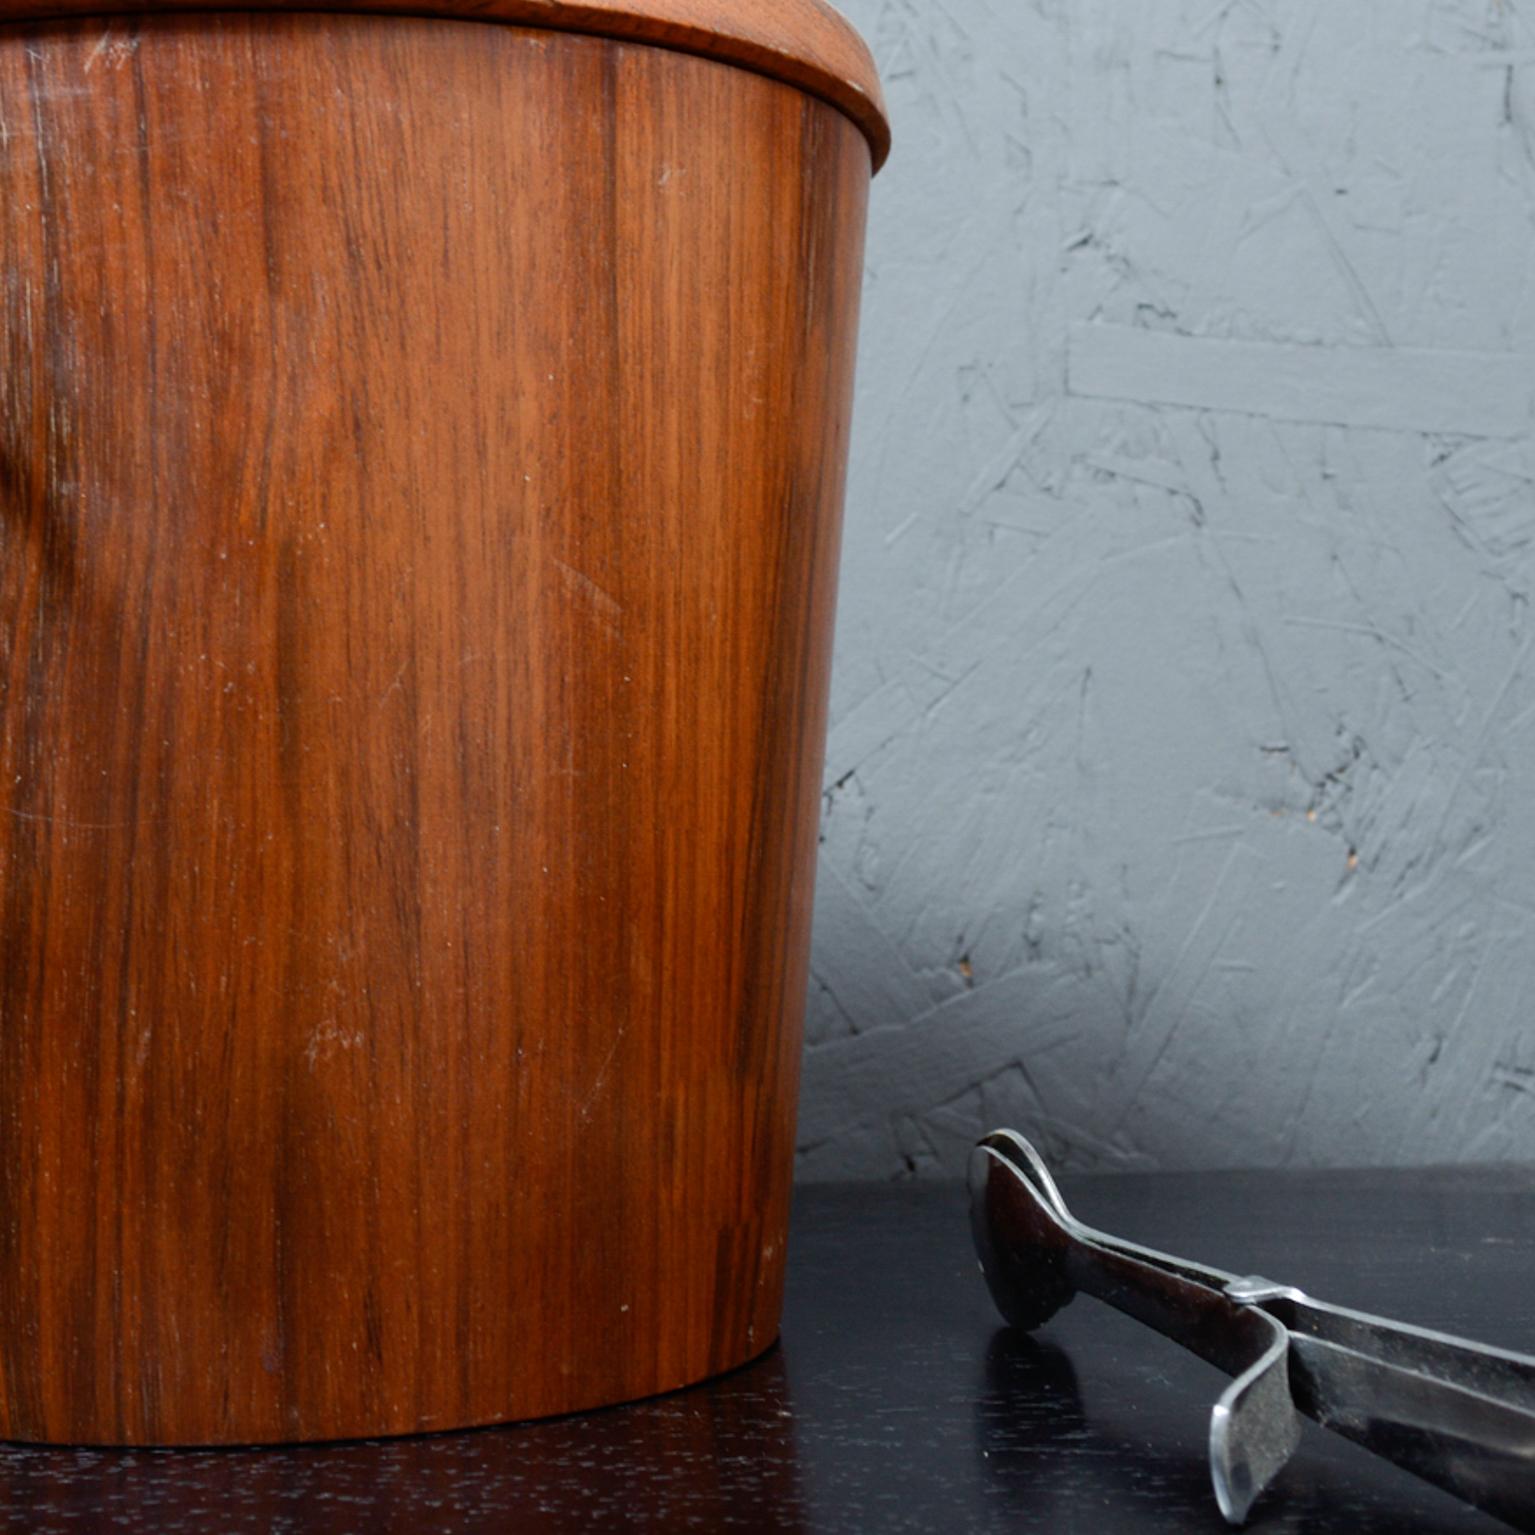 Offering MCM barware 1960s:
Mid-Century Modern walnut wood ice bucket barware set with Nevco stainless steel tongs 1960s
Ice bucket has aluminum liner. Includes stainless steel tongs by Nevco labeled from Japan.
Dimensions: Ice bucket 9 .5 tall x